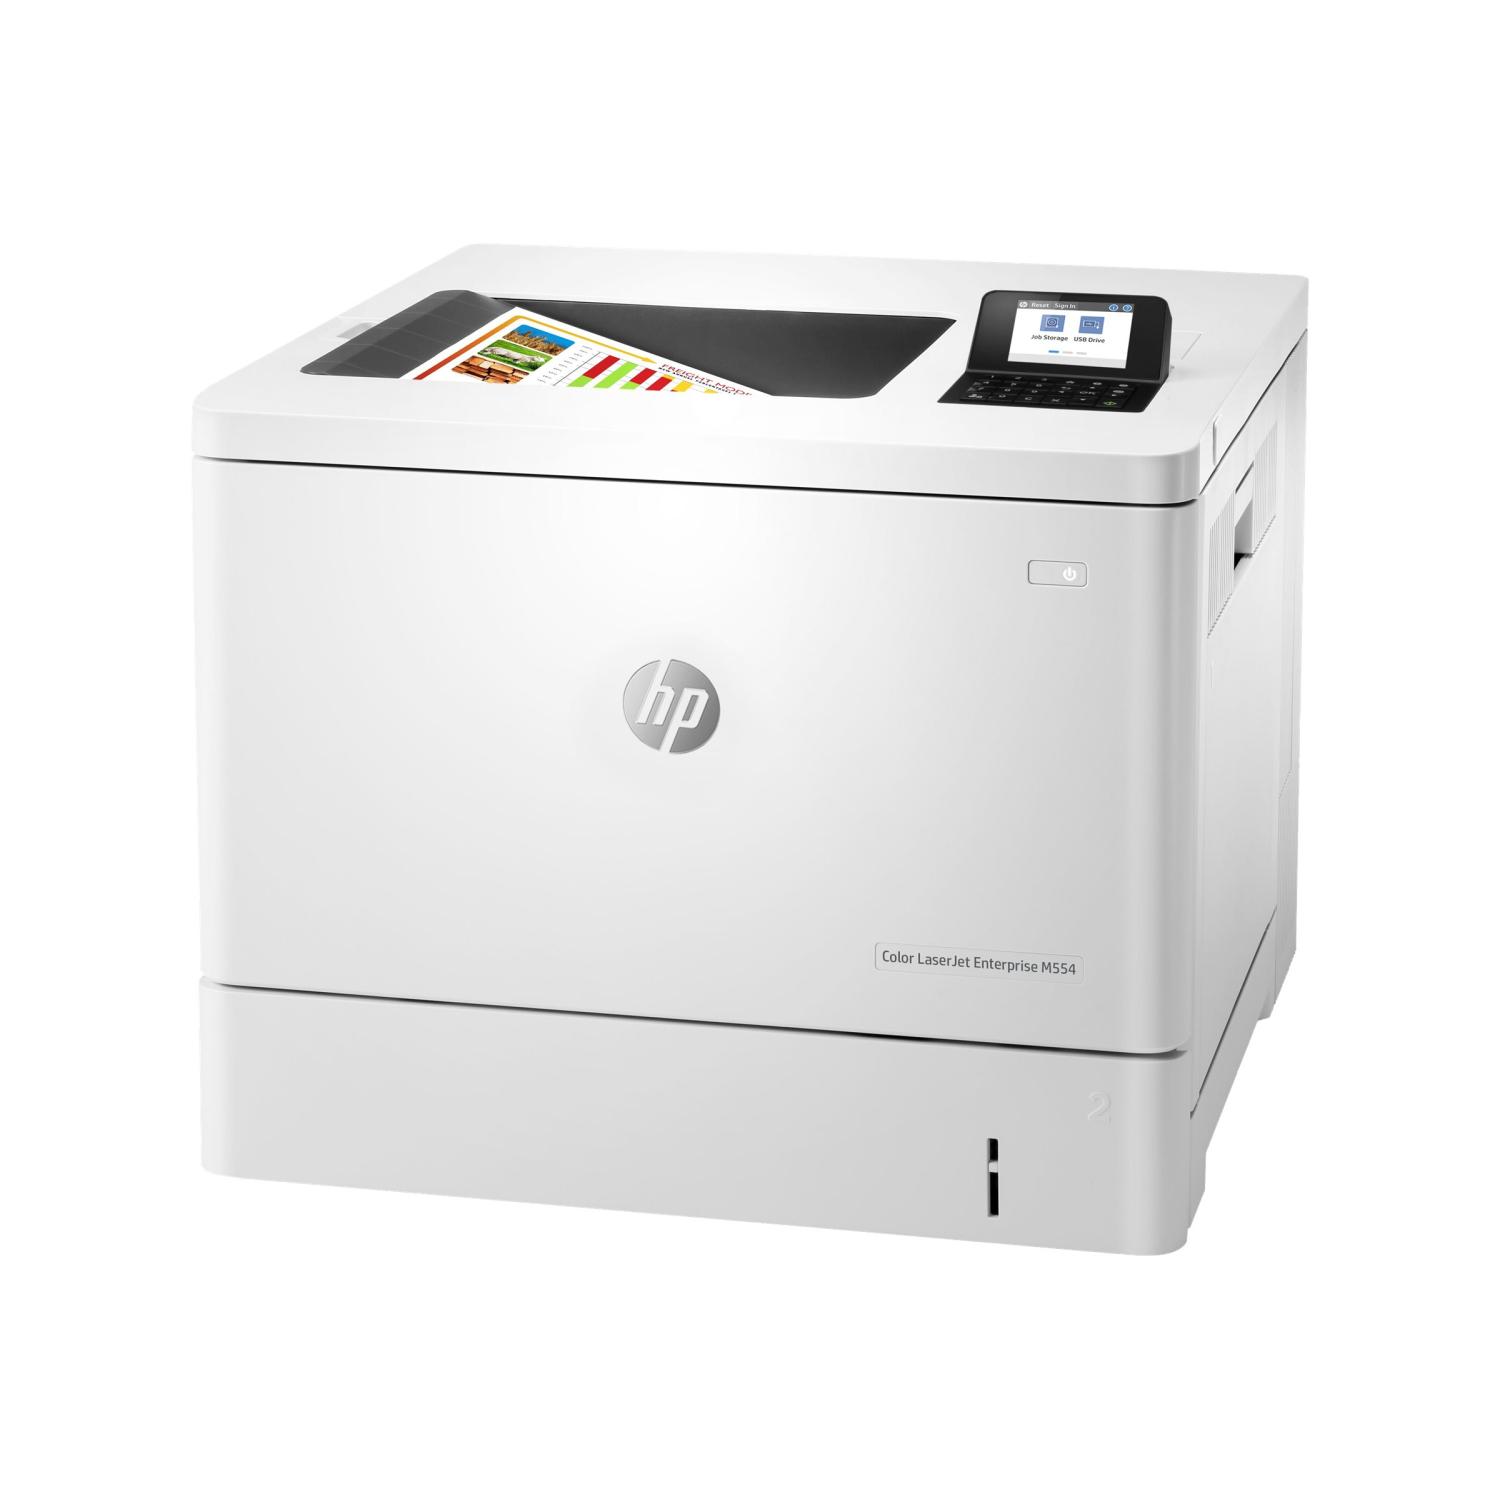 Color LaserJet Enterprise M554 Printer series